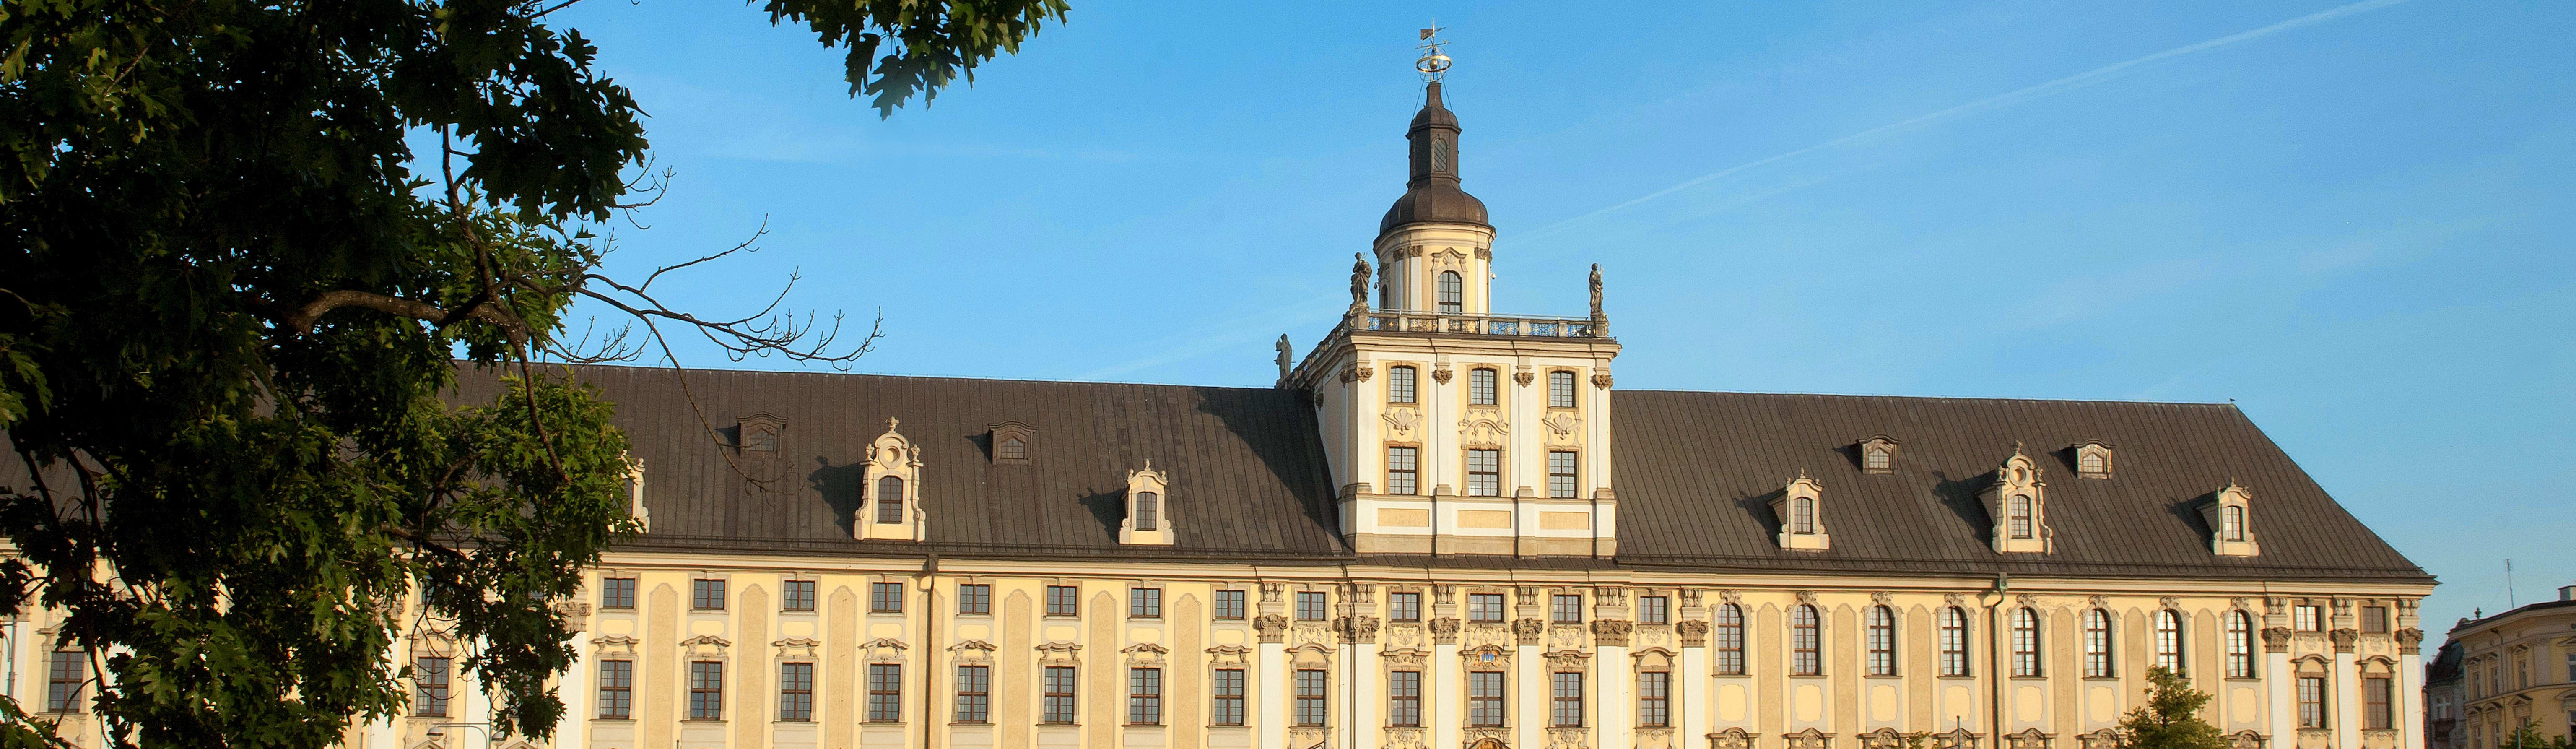 university-of-wroclaw-breslau-polen-masterstudieng-nge